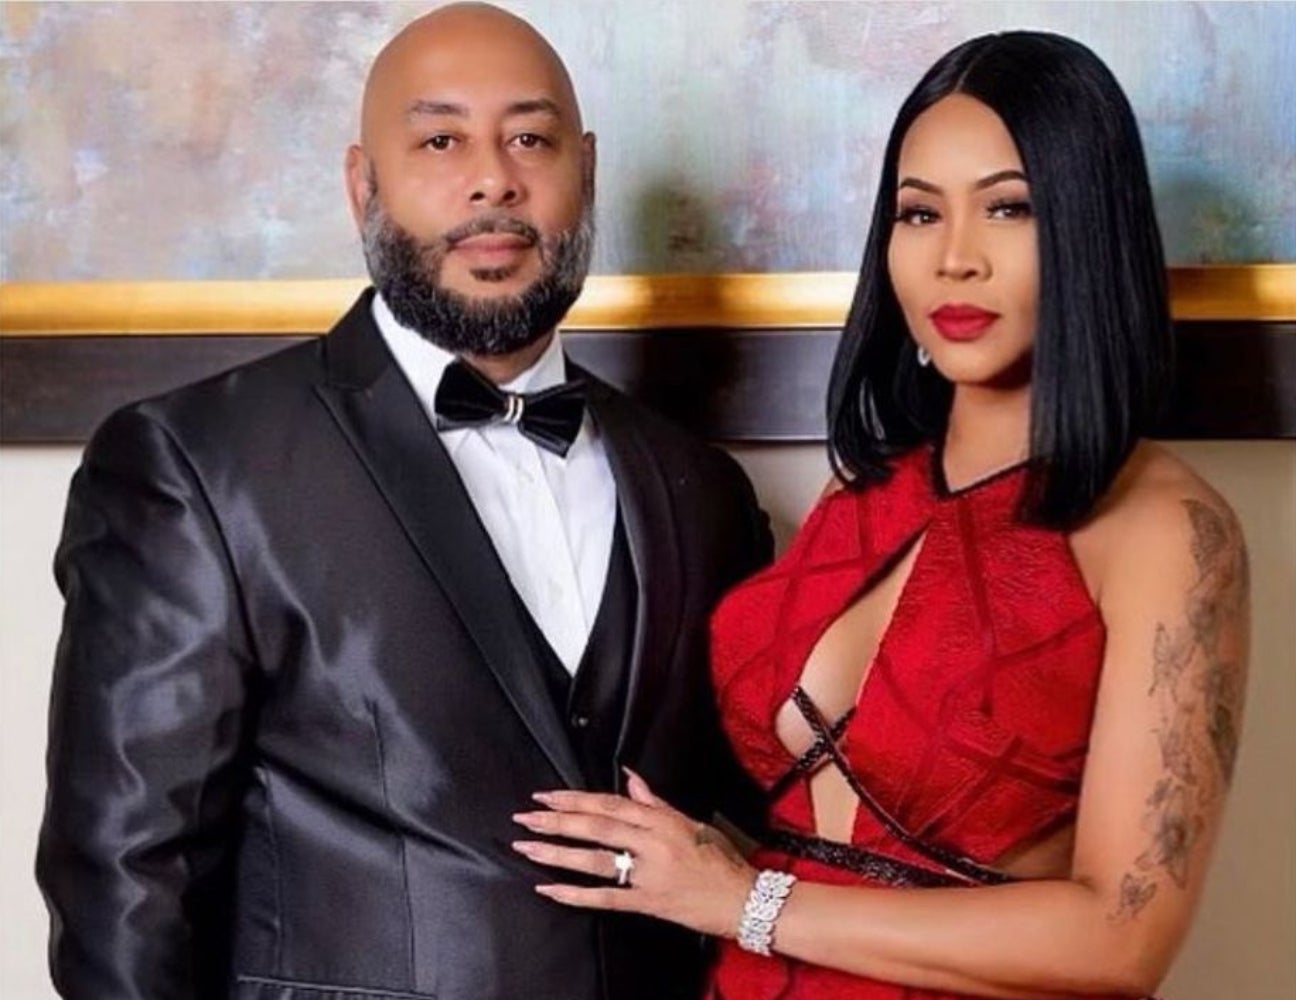 Raymond Santana Jr. And Chandra “Deelishis” Davis Divorcing After 20 Months Of Marriage